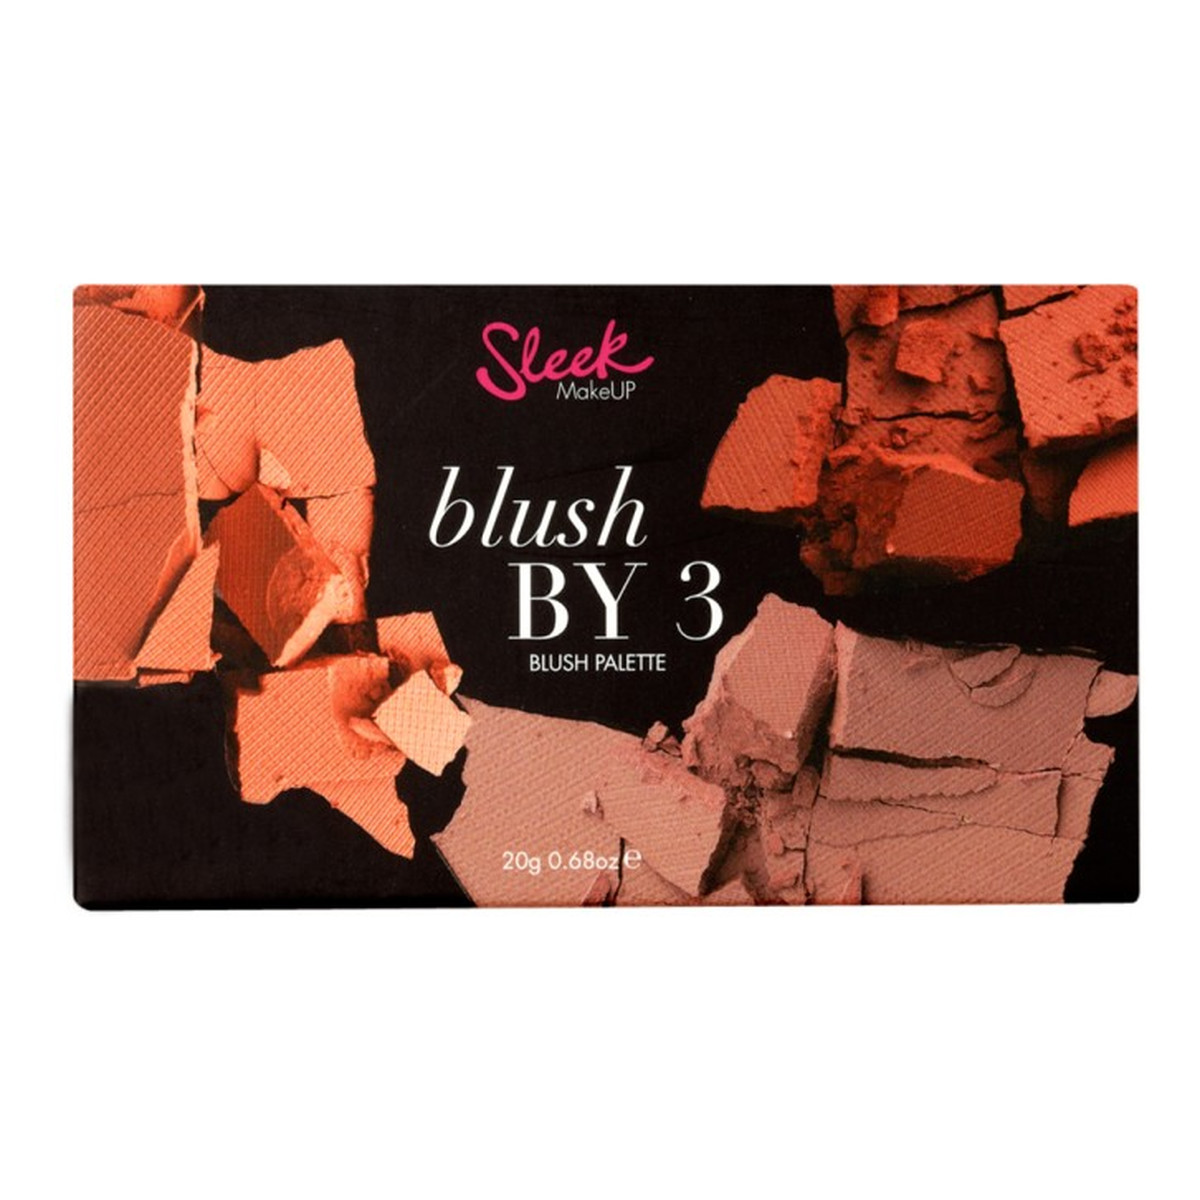 Sleek MakeUP Blush By 3 Róż Do Policzków Paleta Californ.I.A (03) 20ml